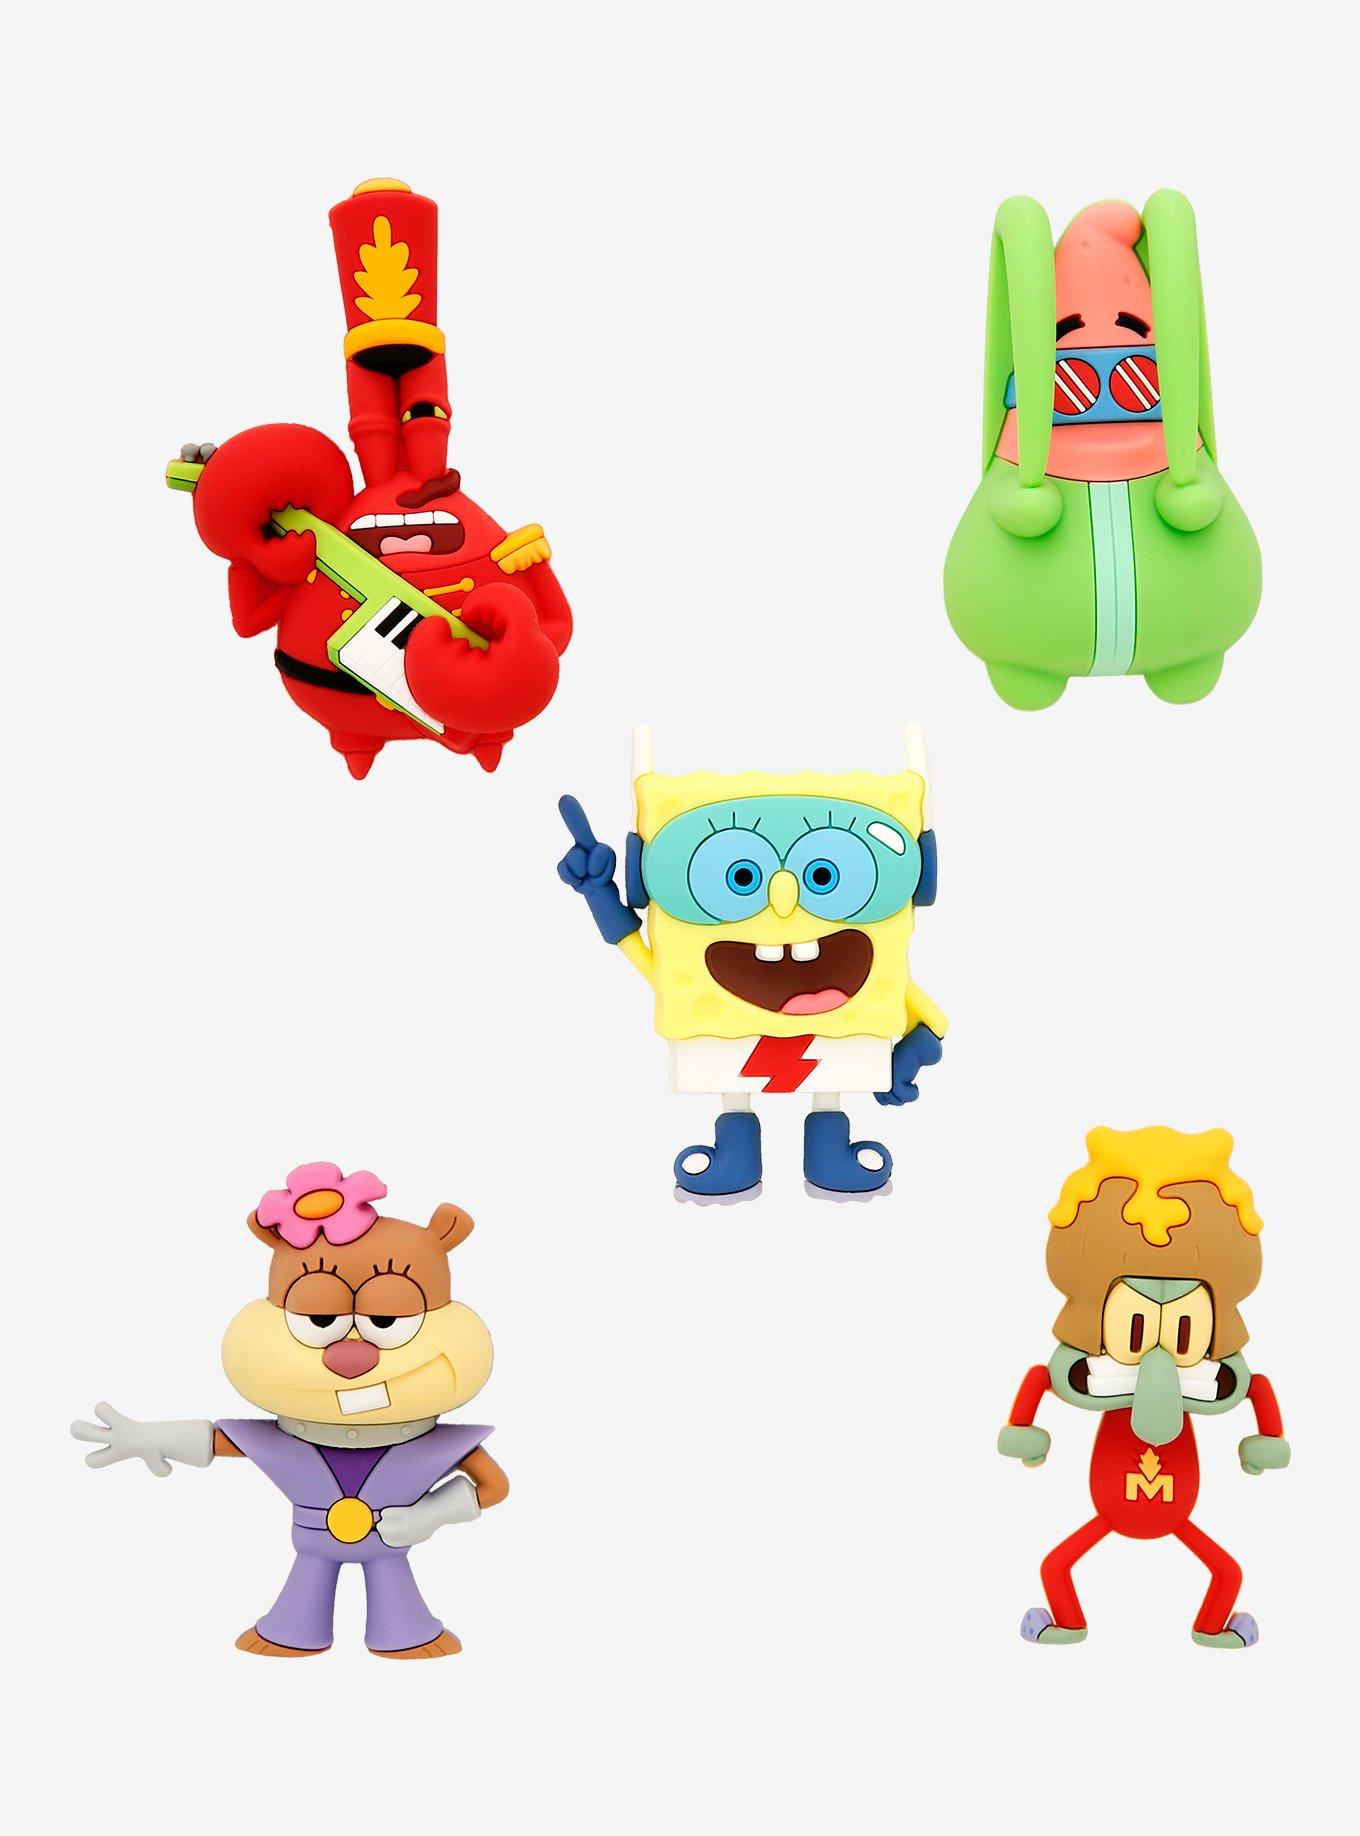 SpongeBob SquarePants Characters Blind Bag Figural Magnet, , hi-res